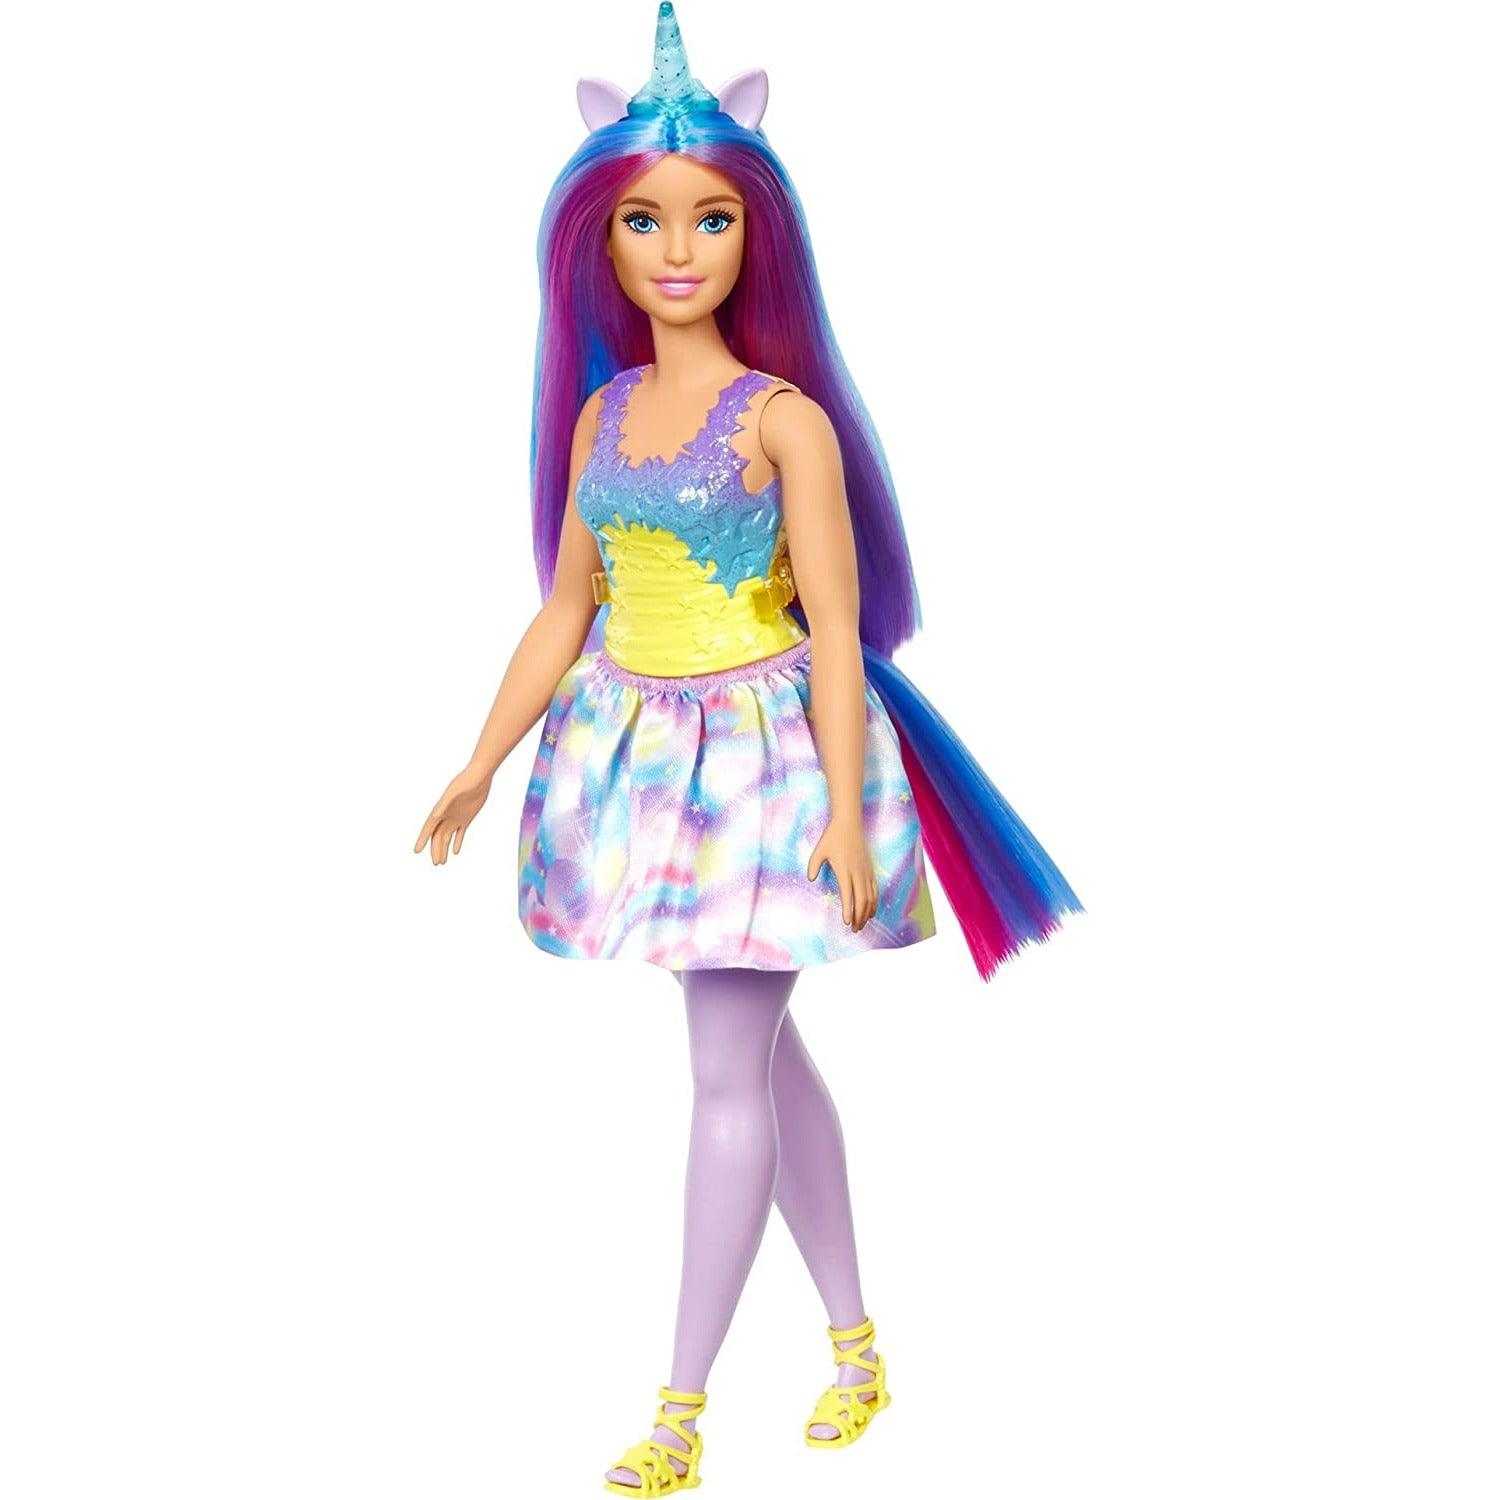 Barbie Fashionistas Doll #218 with Long Blue Hair, Rainbow Top